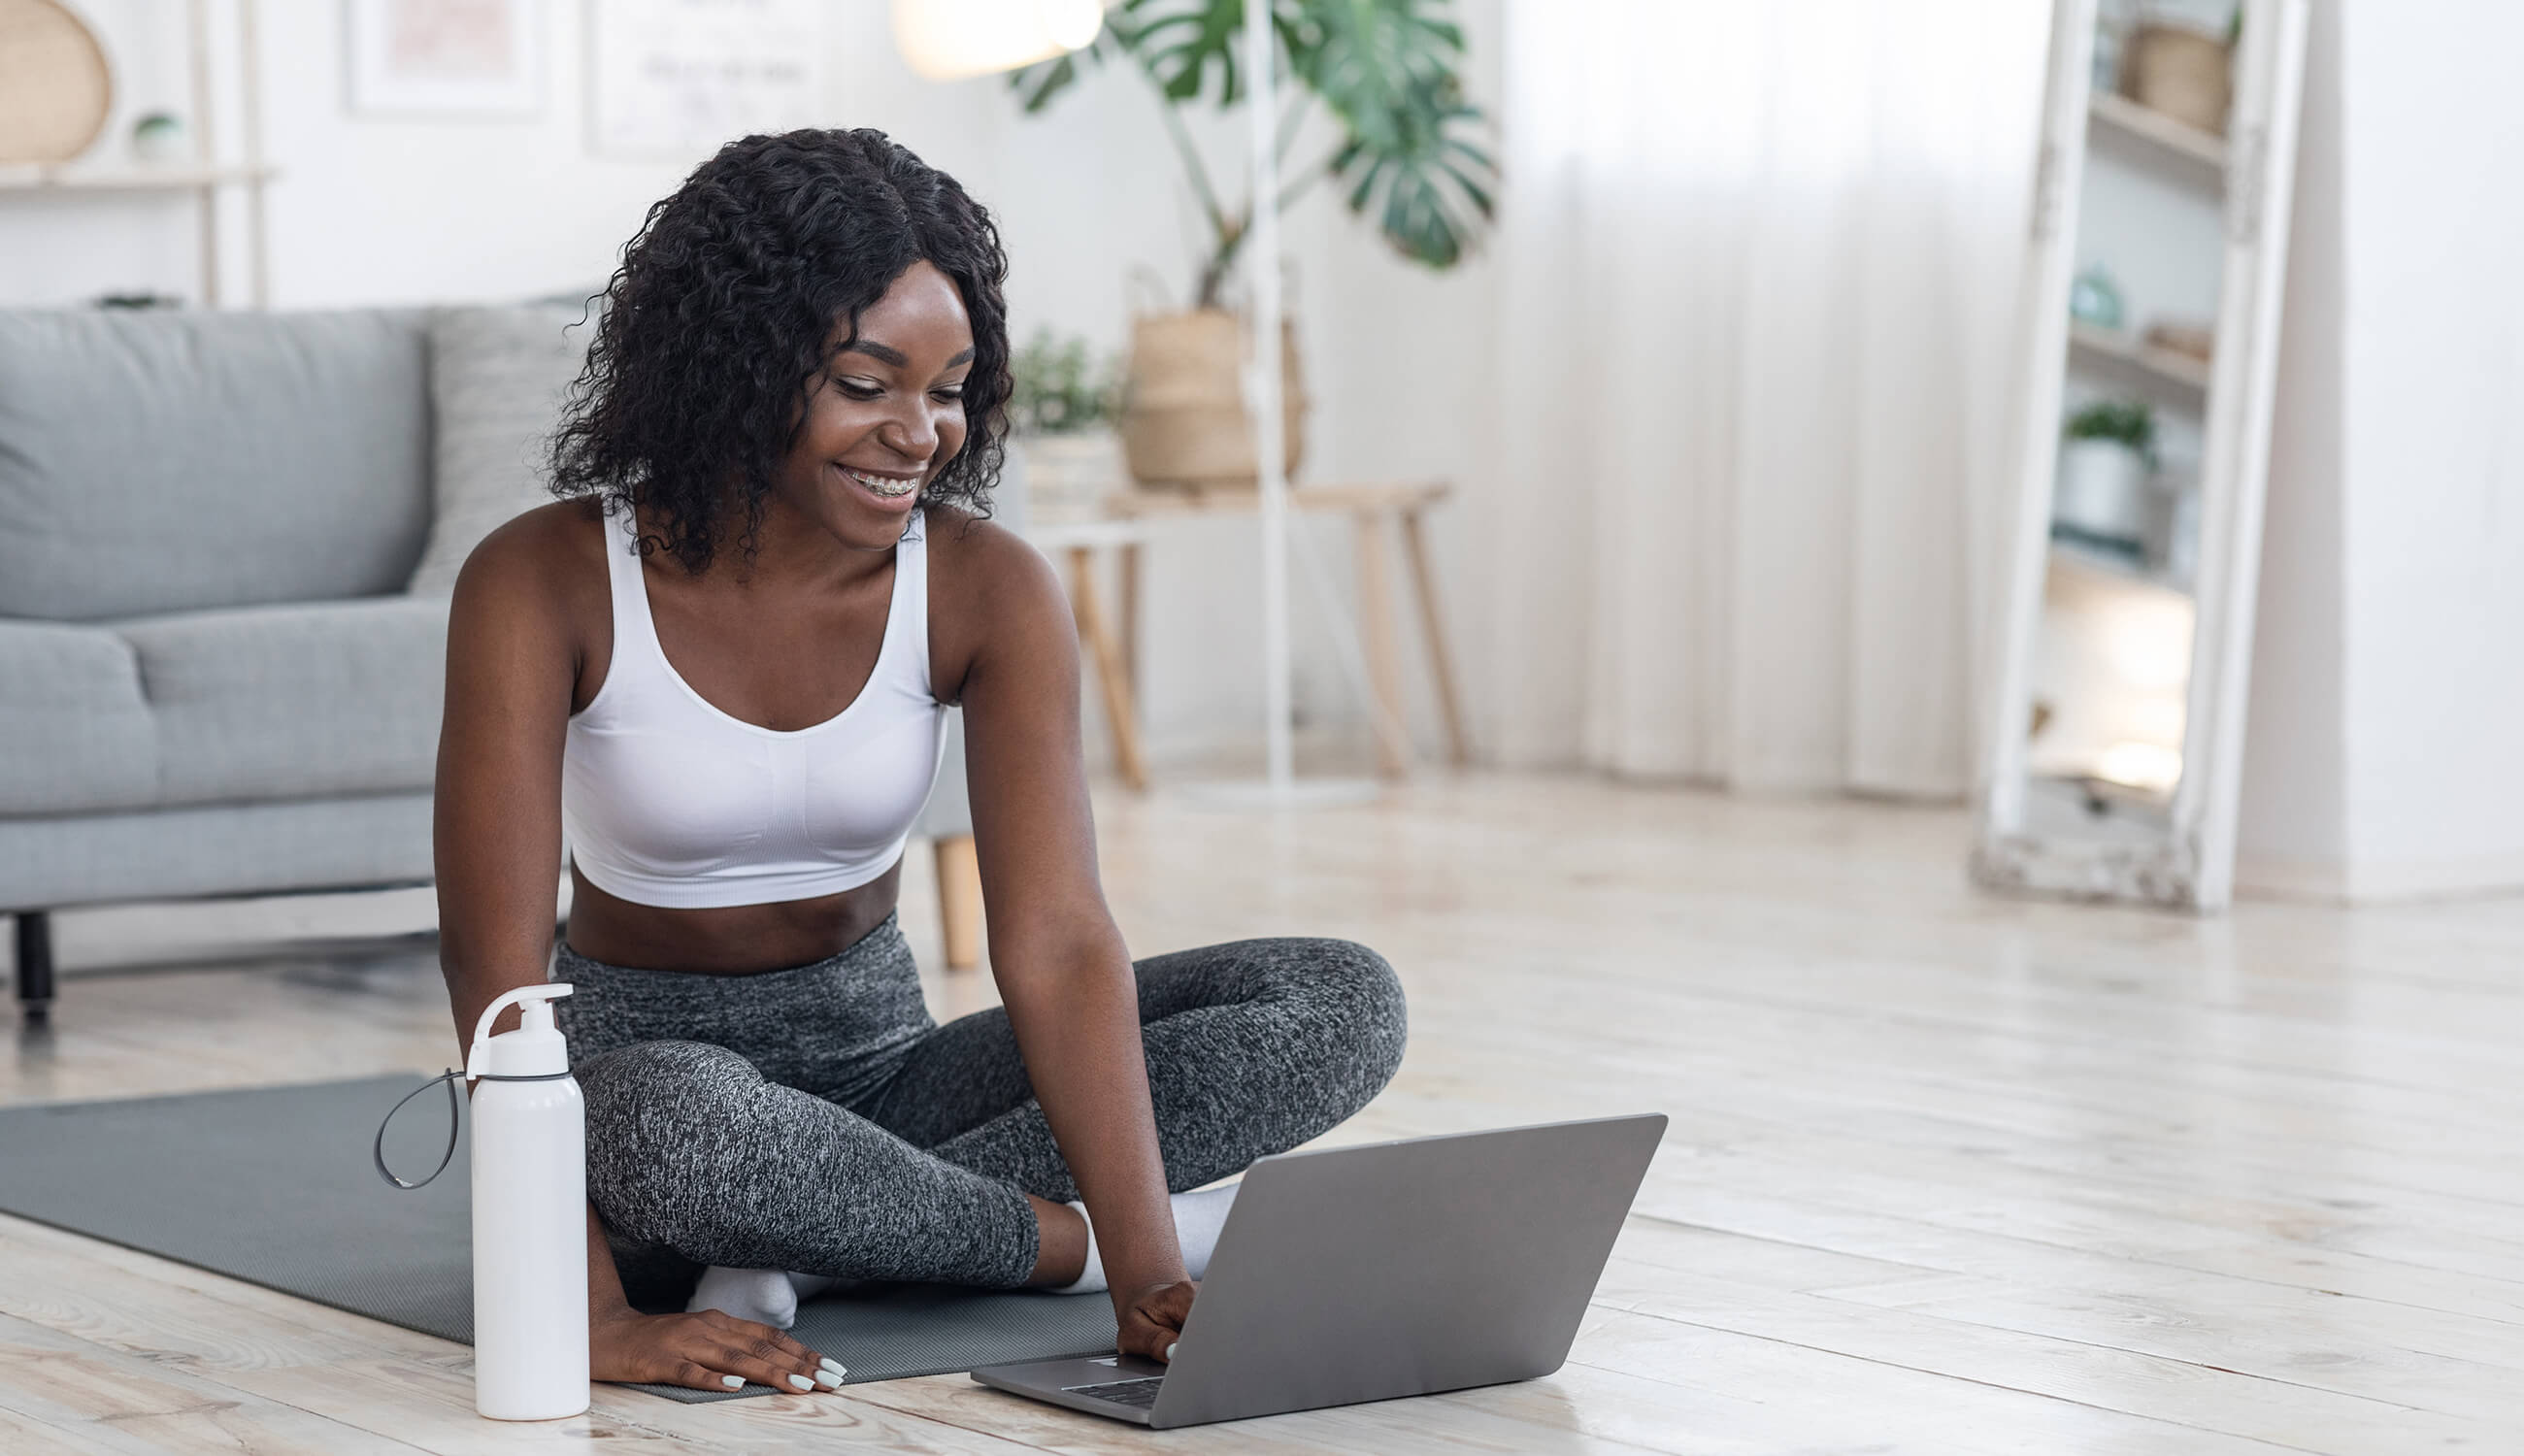 Main_woman using laptop on yoga mat.jpg